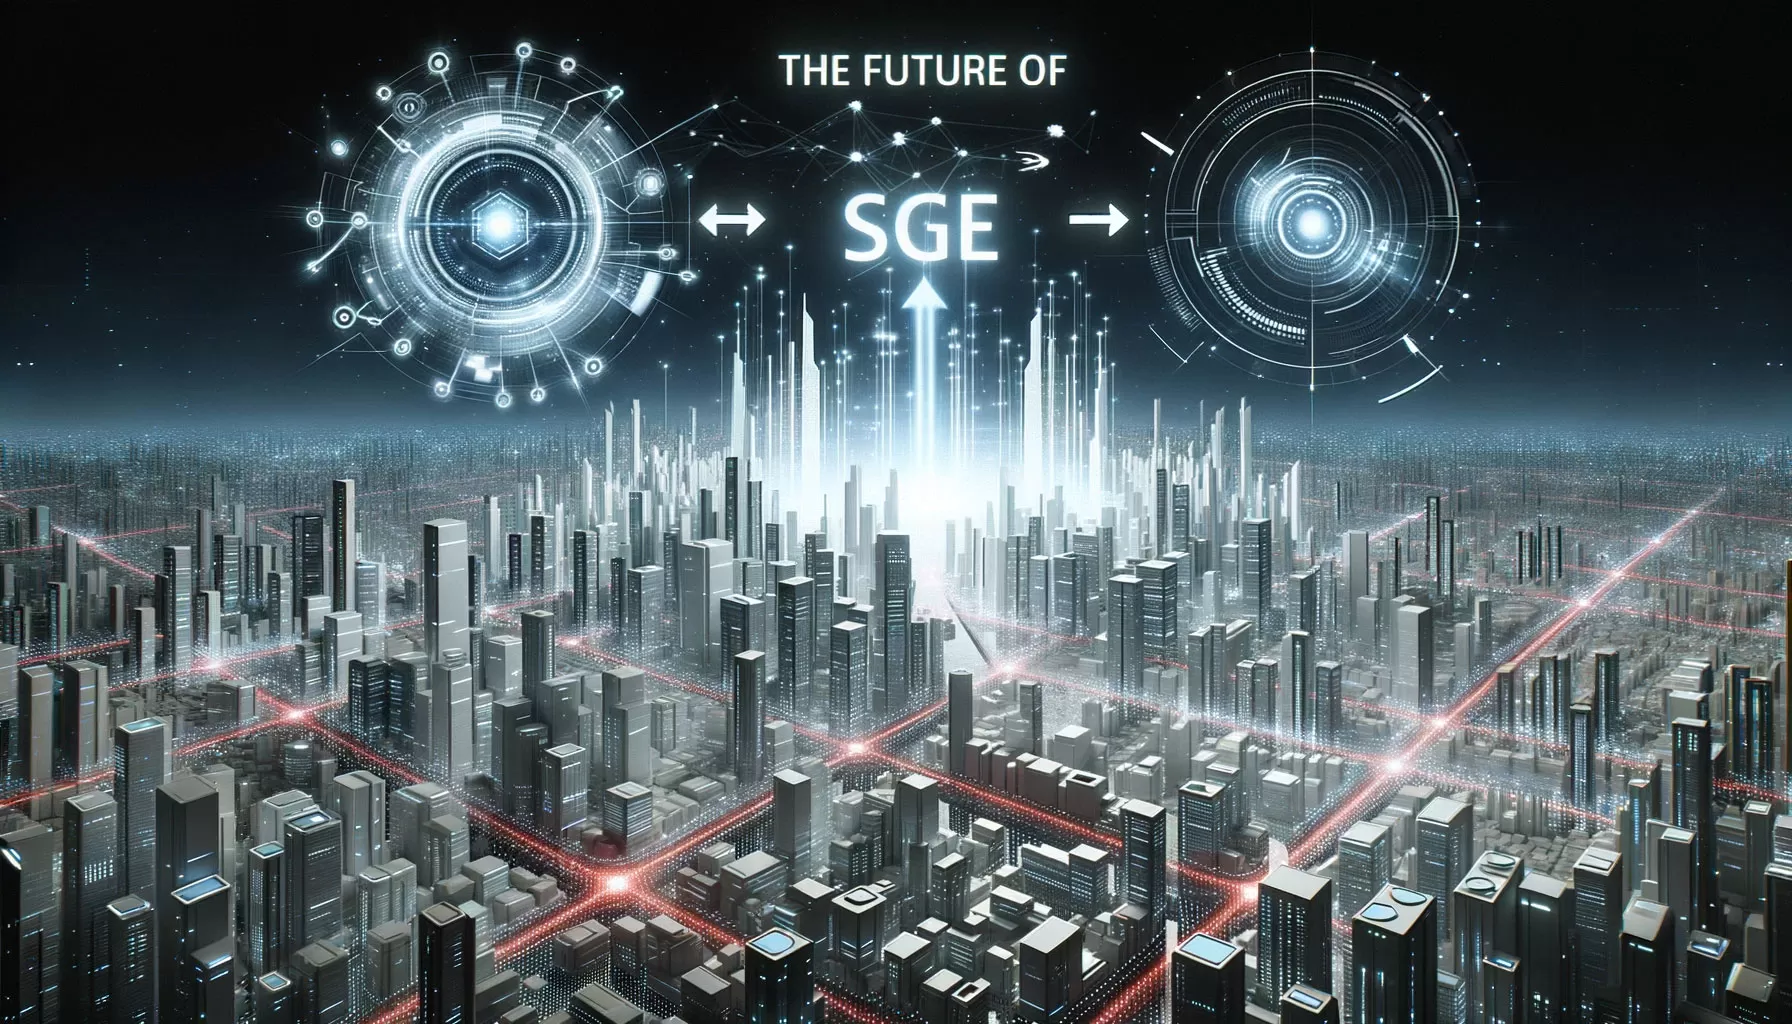 The Future of SGE